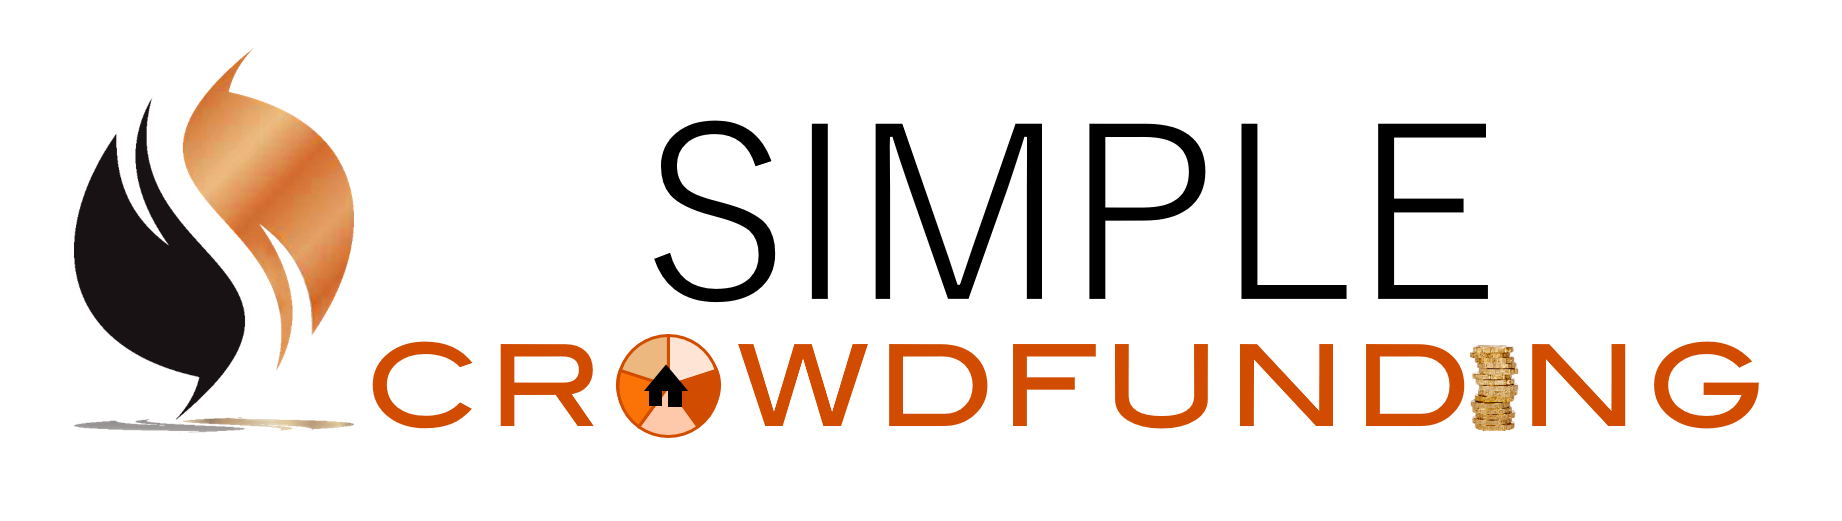 Simple Crowdfunding logo